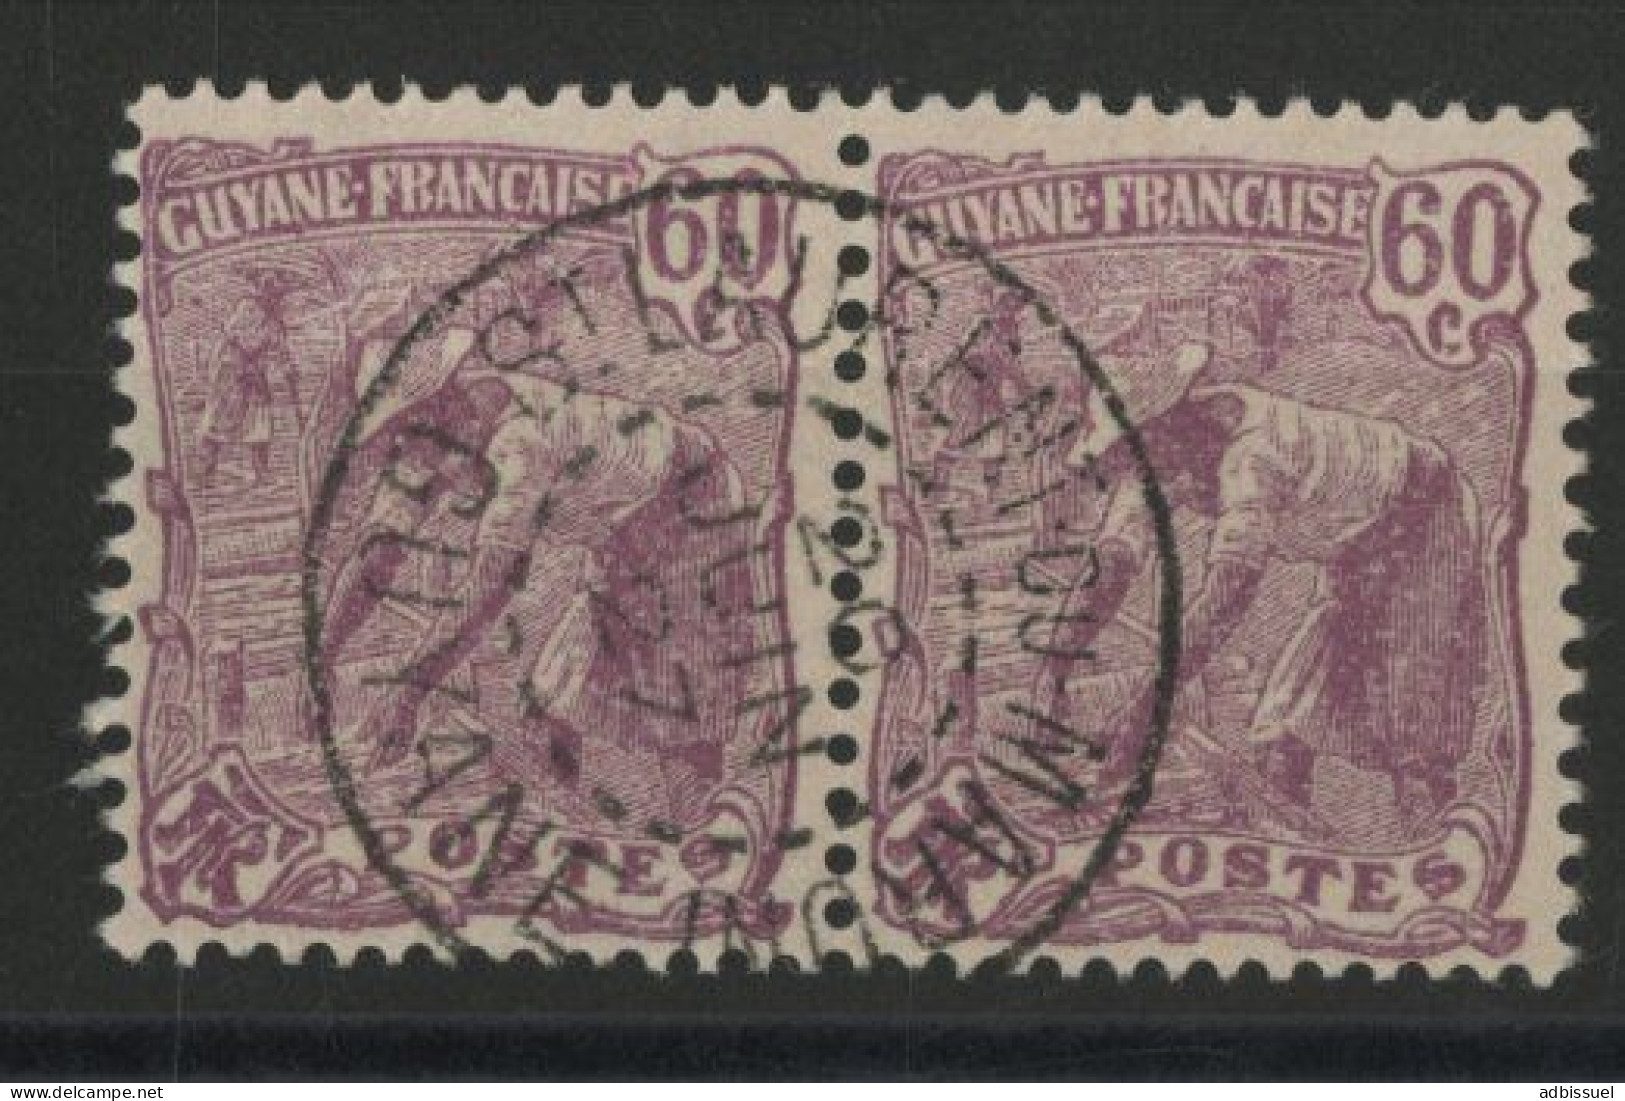 COLONIES GUYANE N° 84 PAIRE Oblitérée "SAINT LAURENT DU MARONI" 20/06/1927 TB - Used Stamps